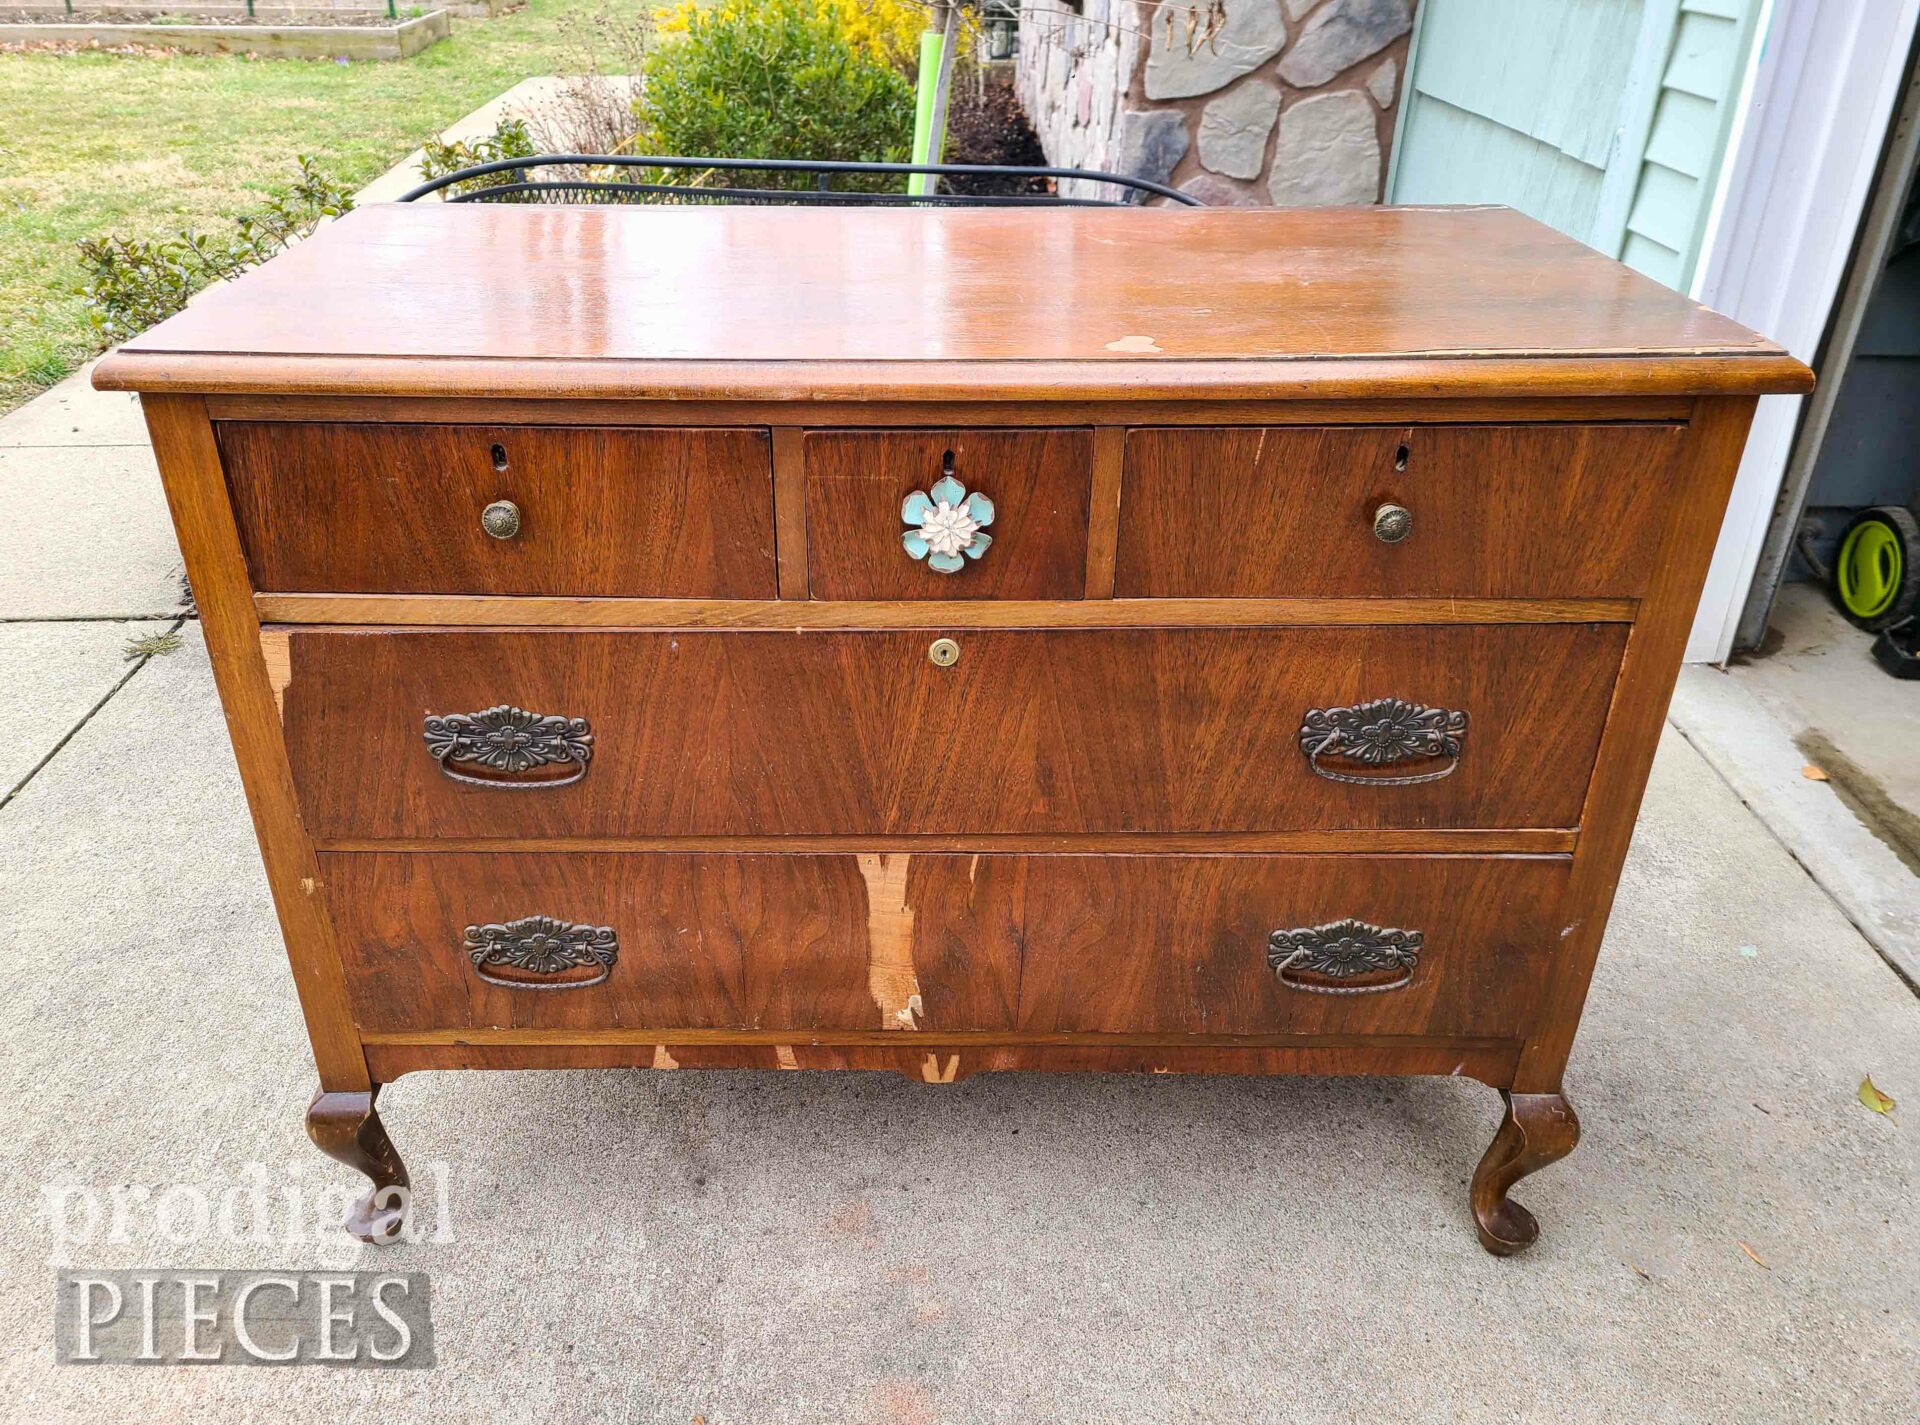 Damaged Antique Dresser Before Restyle | prodigalpieces.com #prodigalpieces